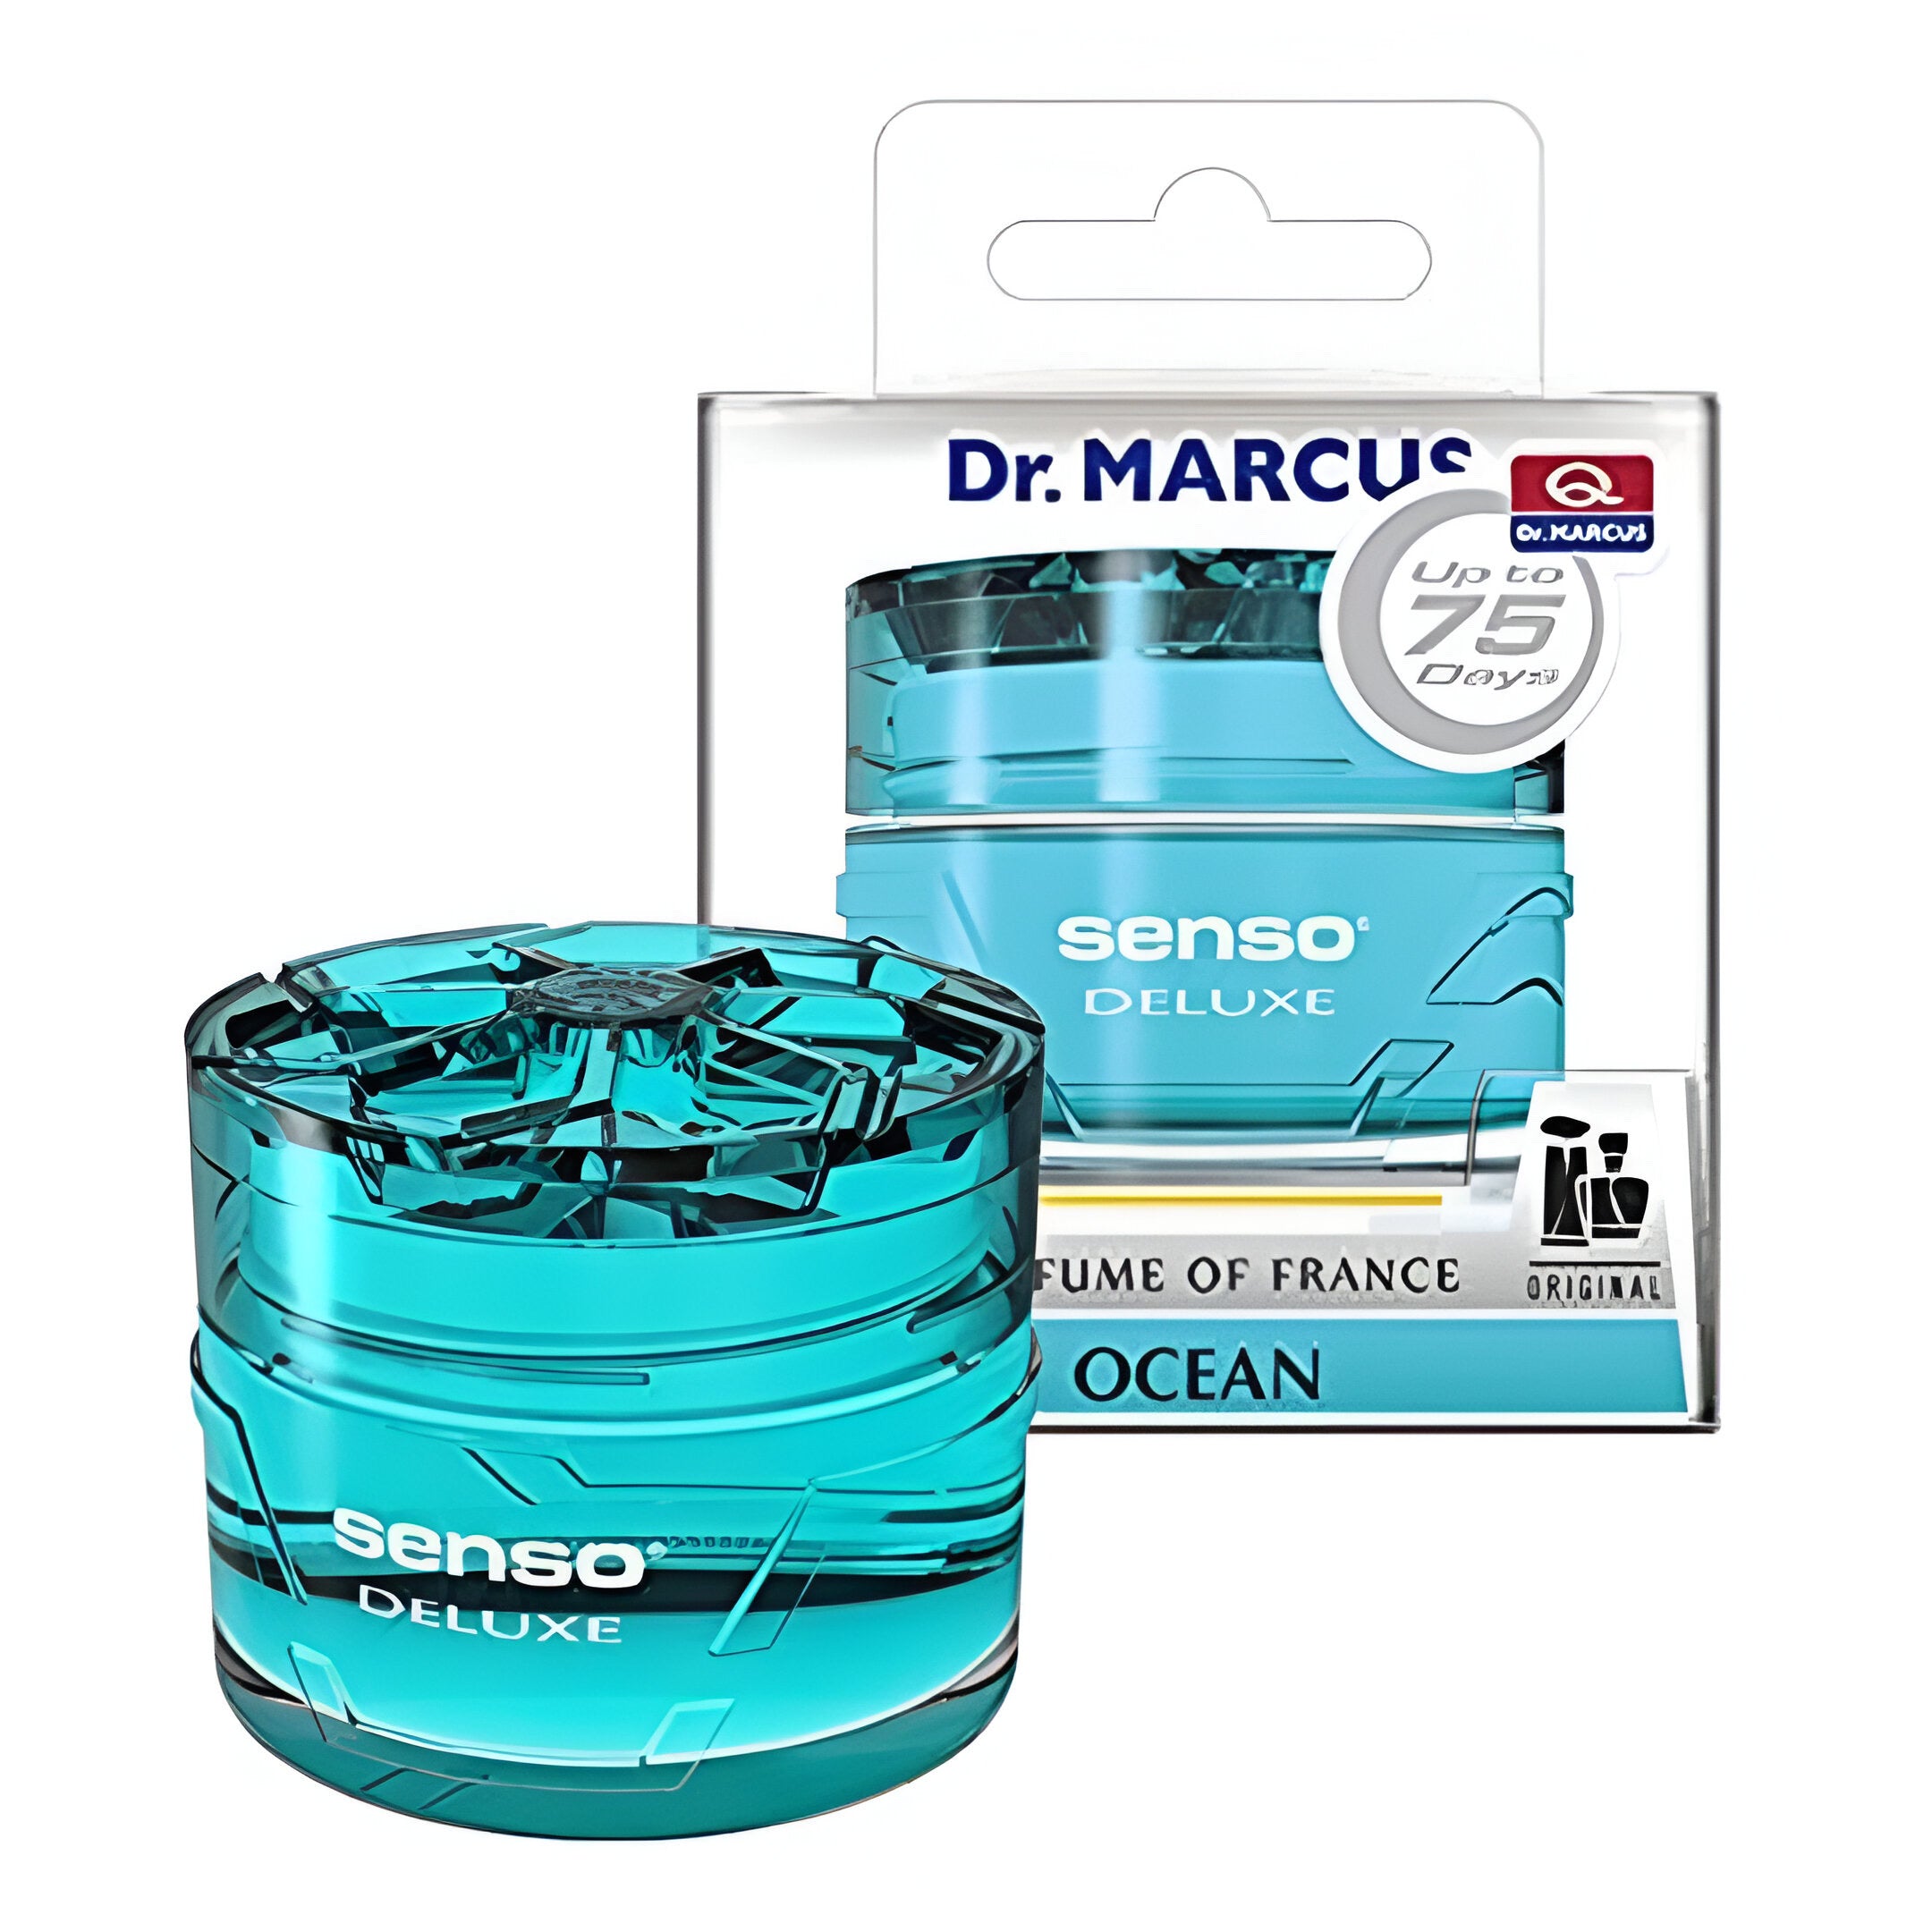 Dr.Marcus Senso Delux Air freshener